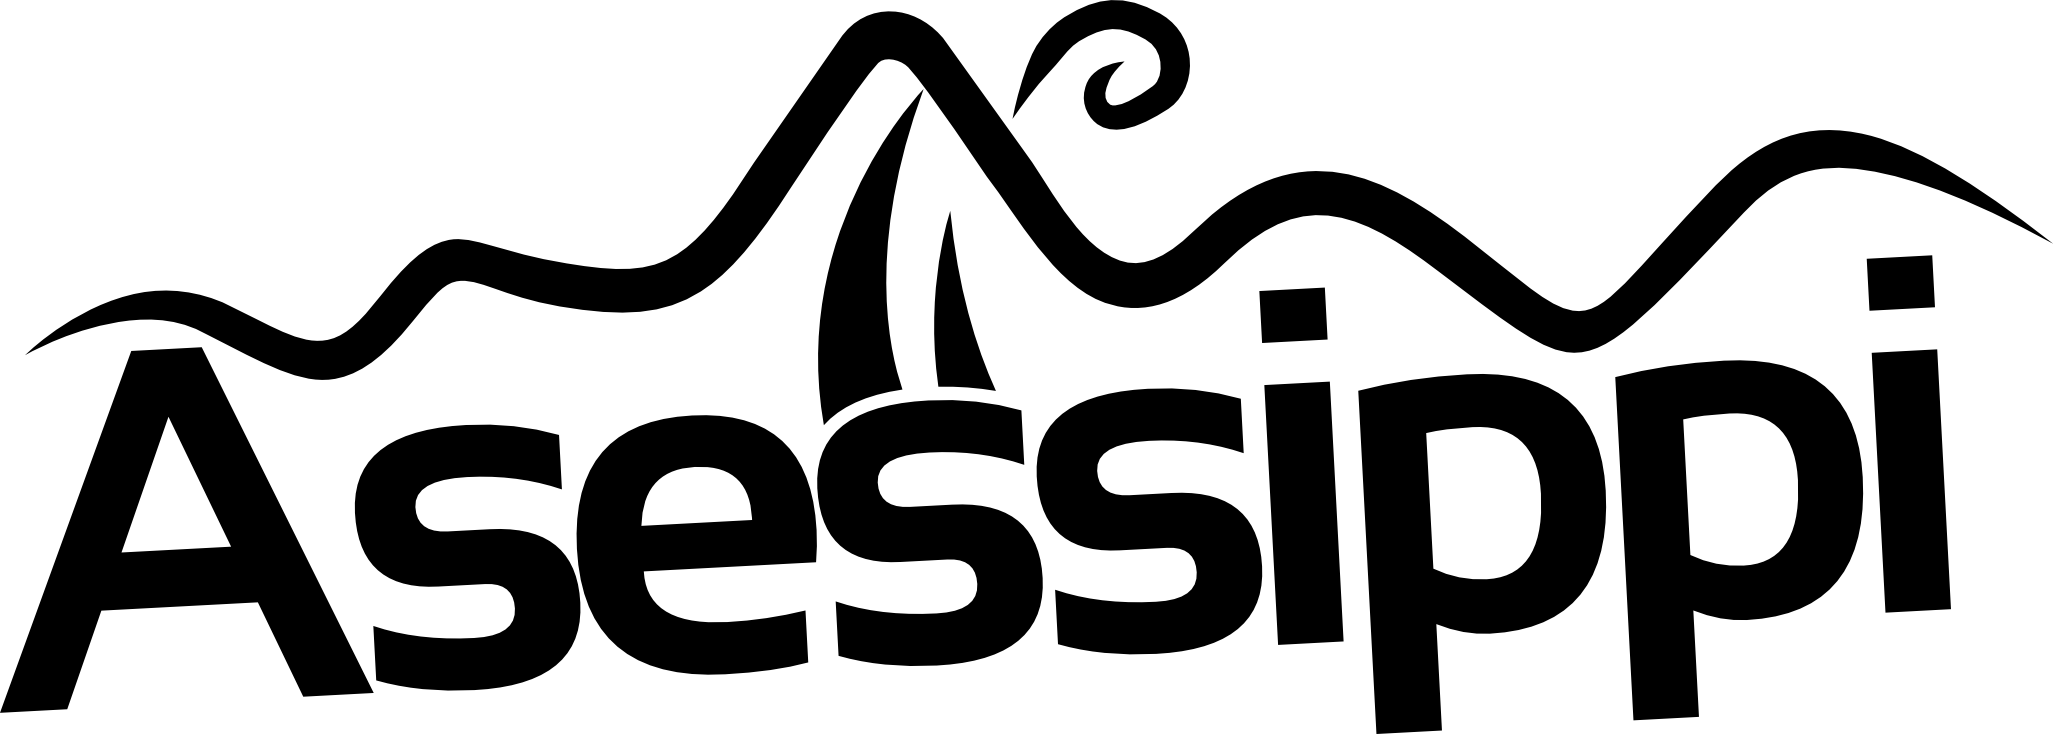 2020-Logo-Black-Tx-NOTAG (002).png